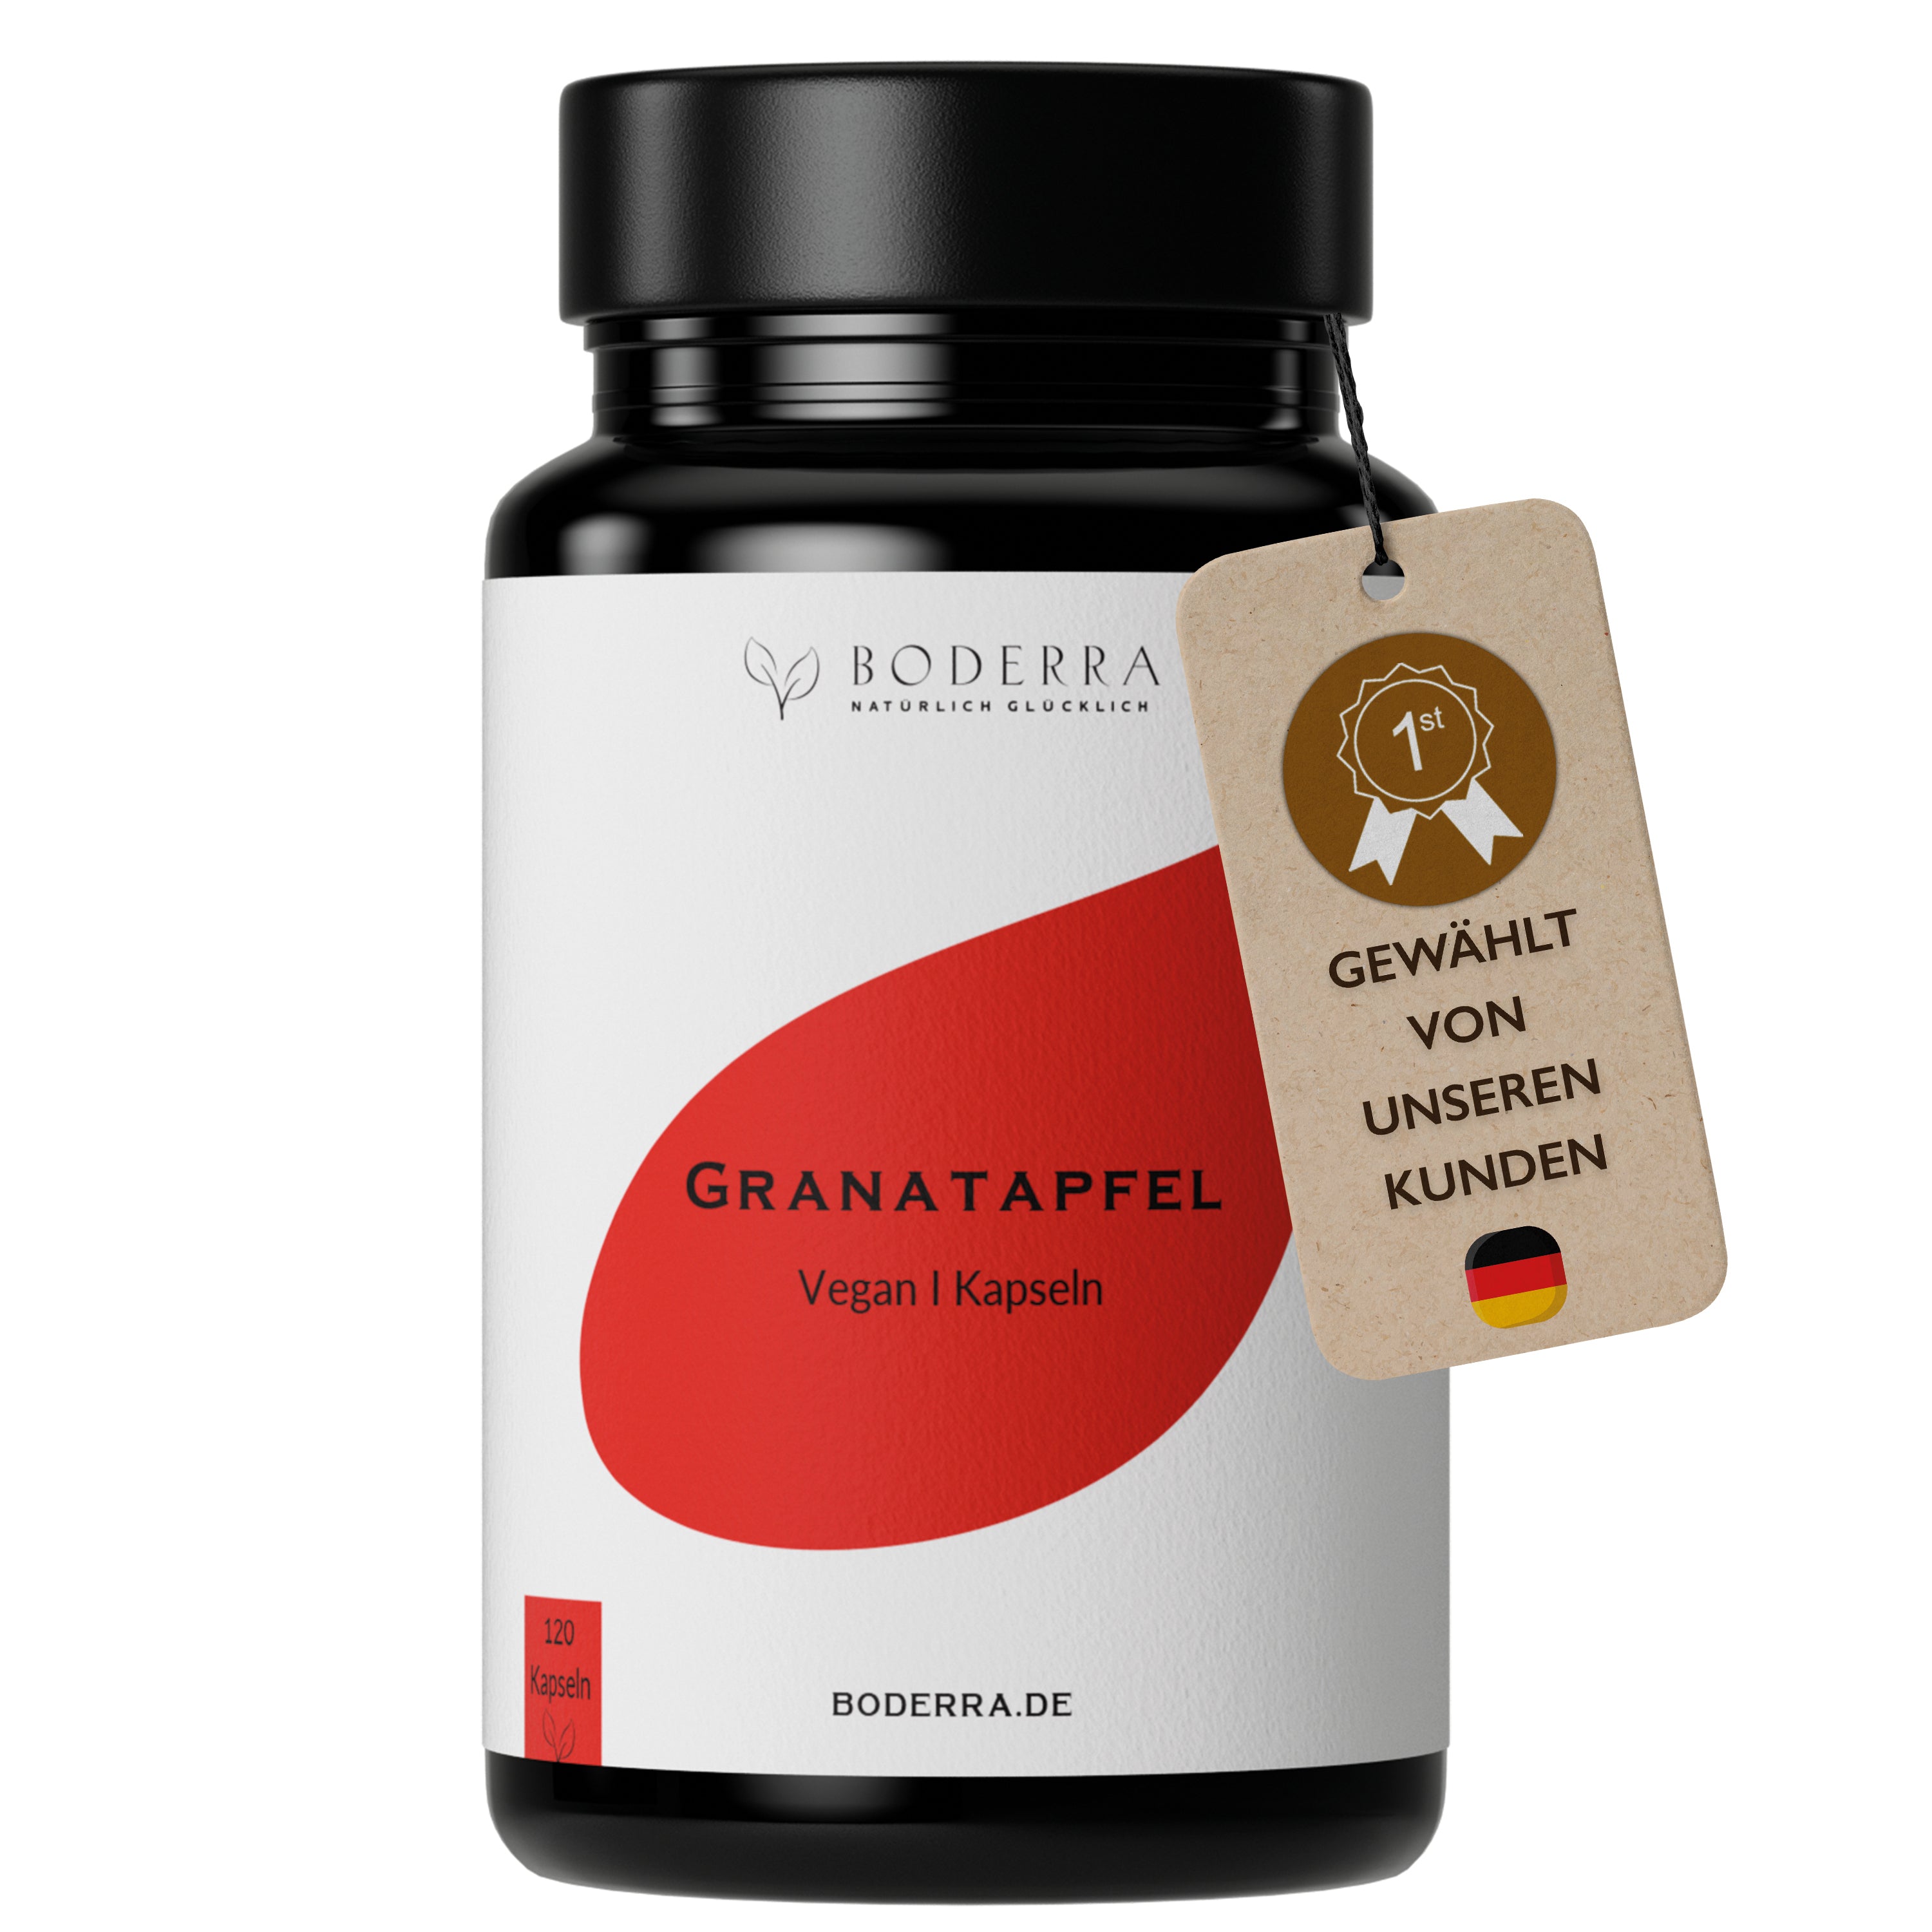 Granatapfel Extrakt Kapseln